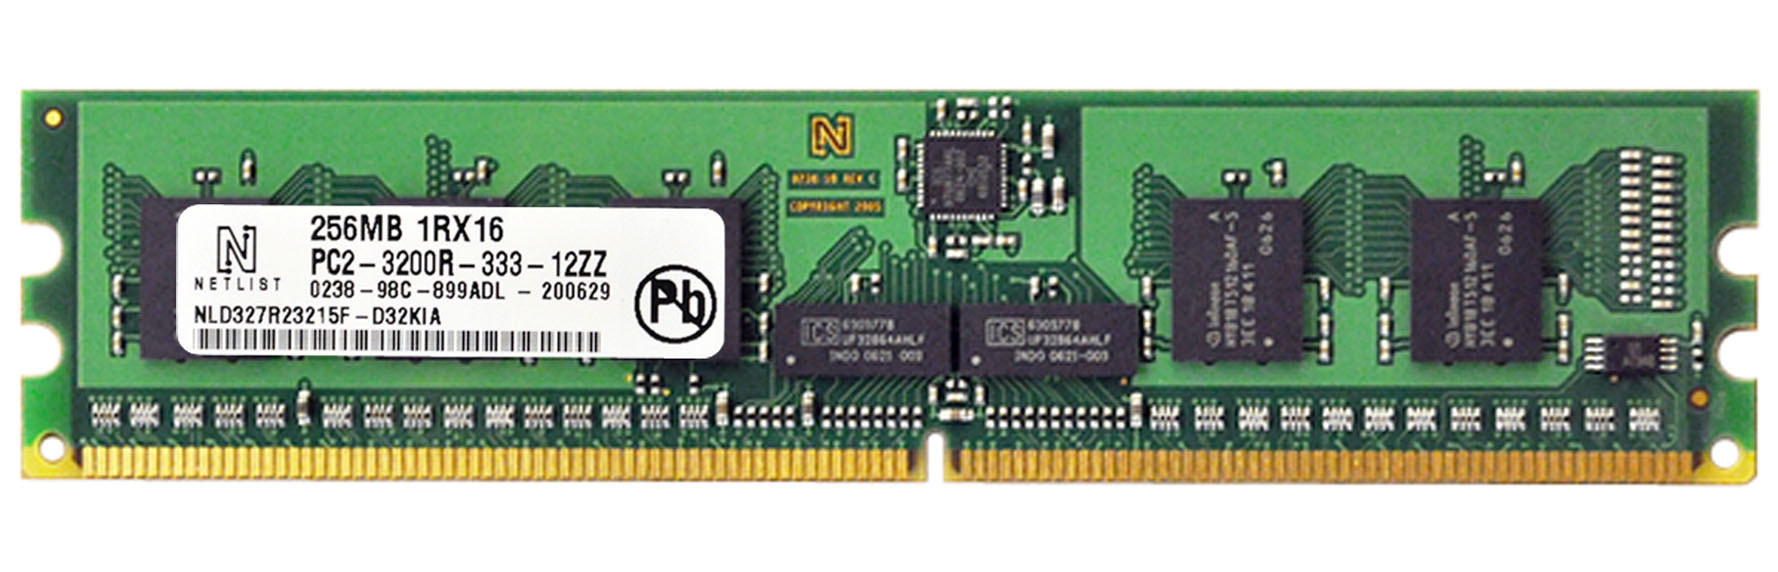 NLD327R23215F-D32KIA NetList 256MB PC2-3200 DDR2-400MHz ECC Registered CL3 240-Pin DIMM Single Rank Memory Module